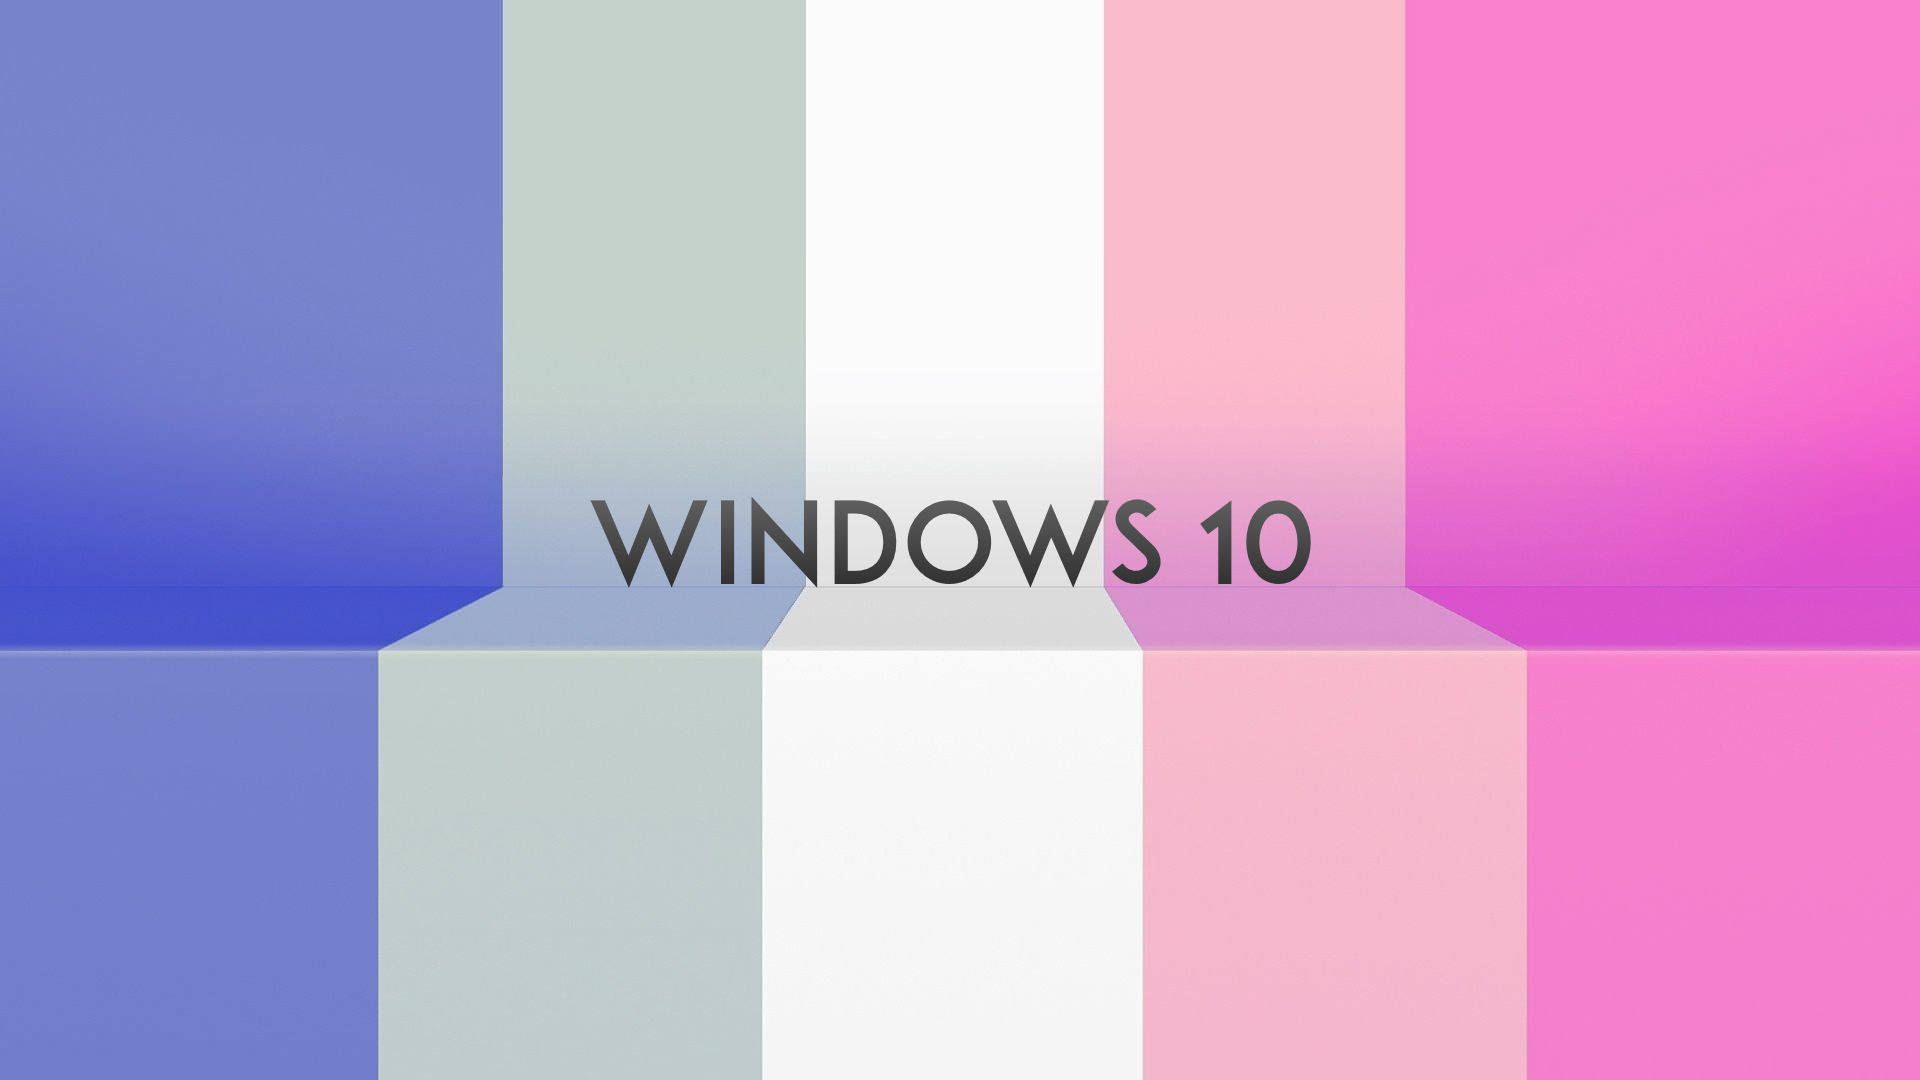 FREE Windows 10 Wallpaper in PSD